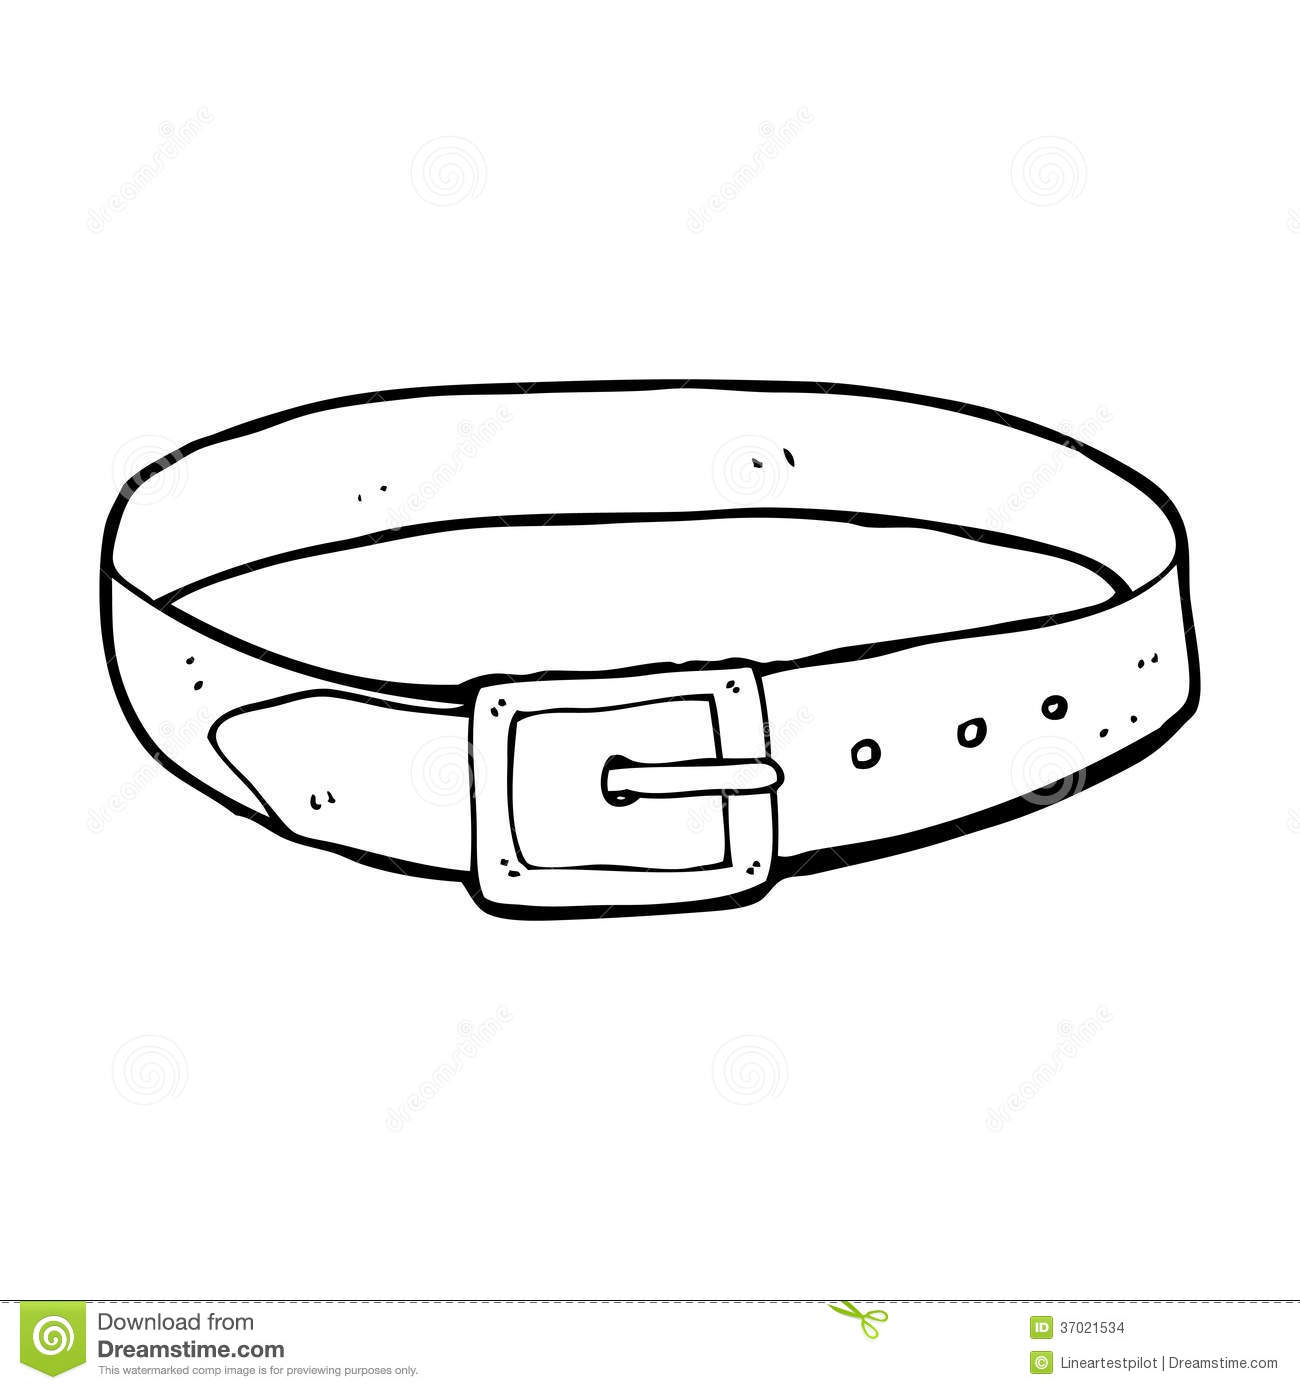 belt clipart black and white